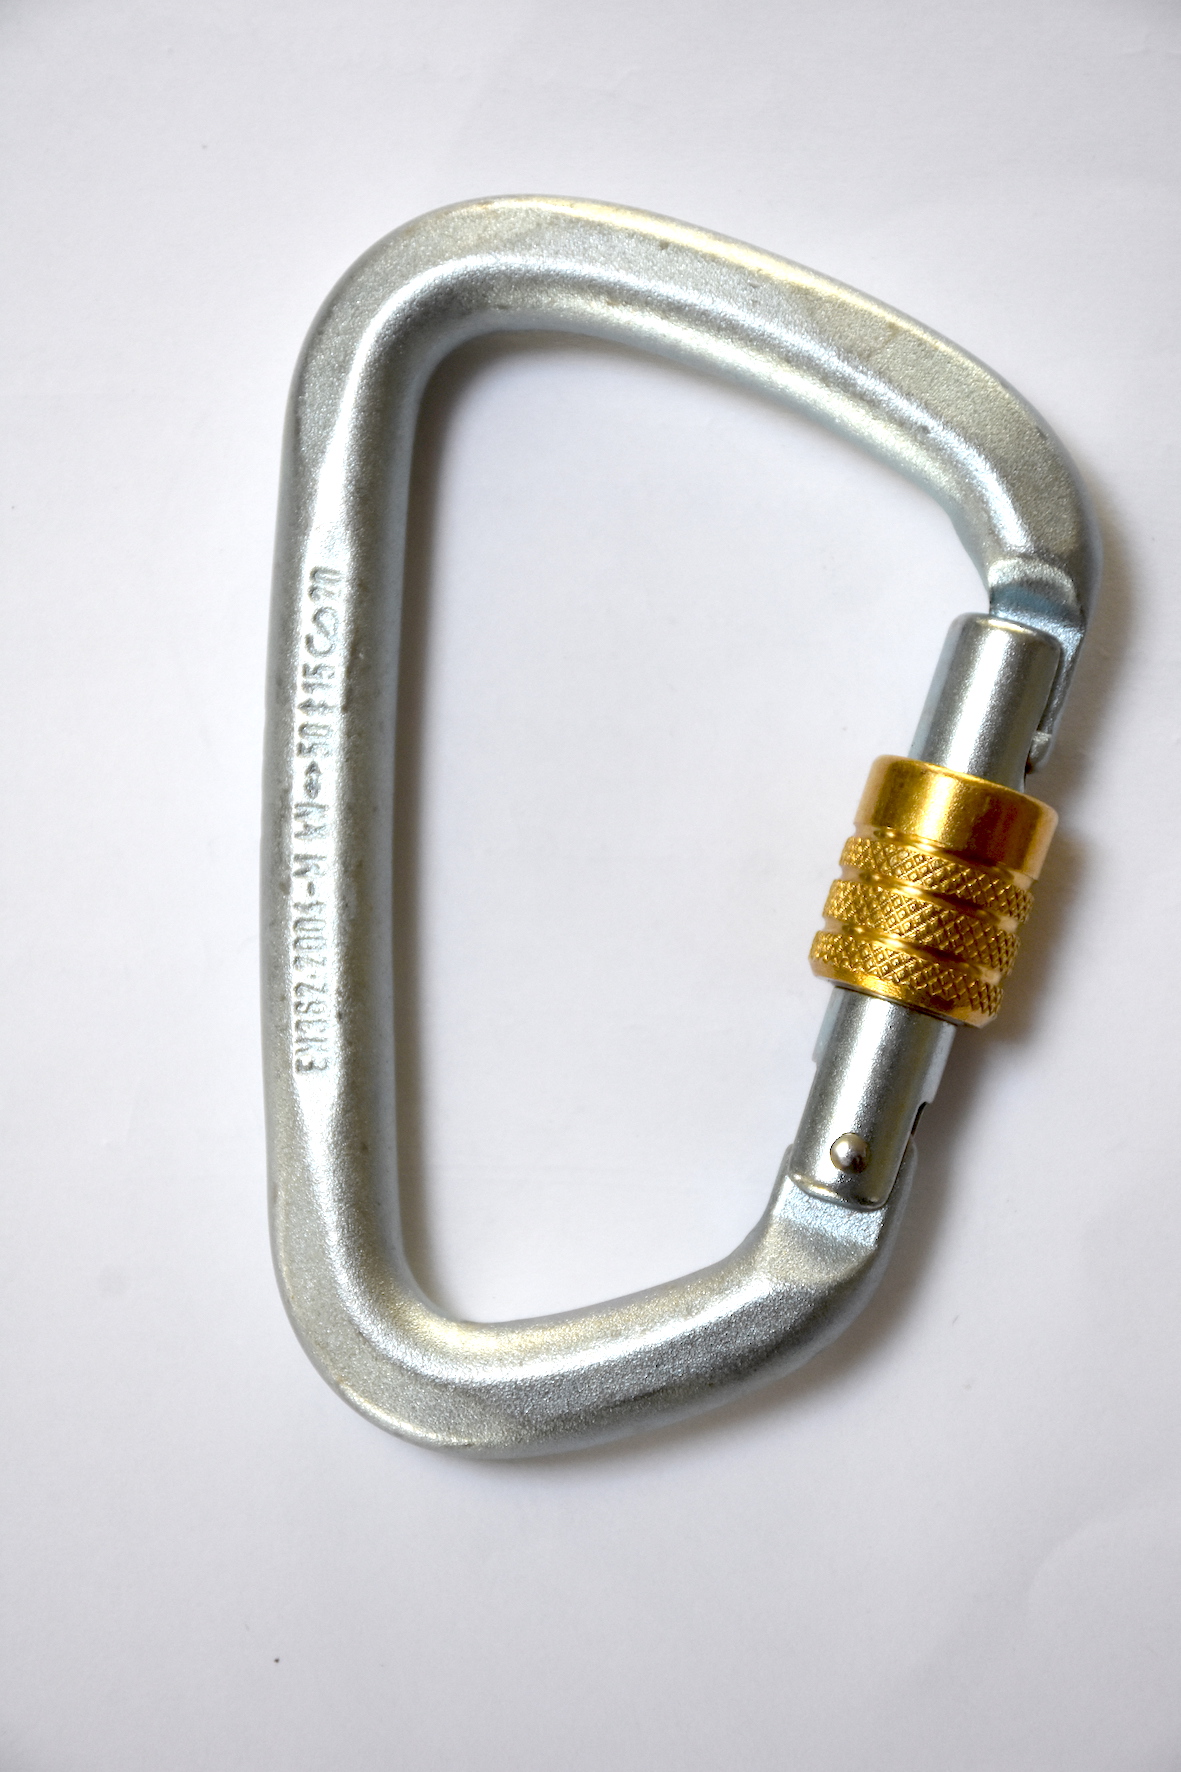 Karabiner D Steel screw lock